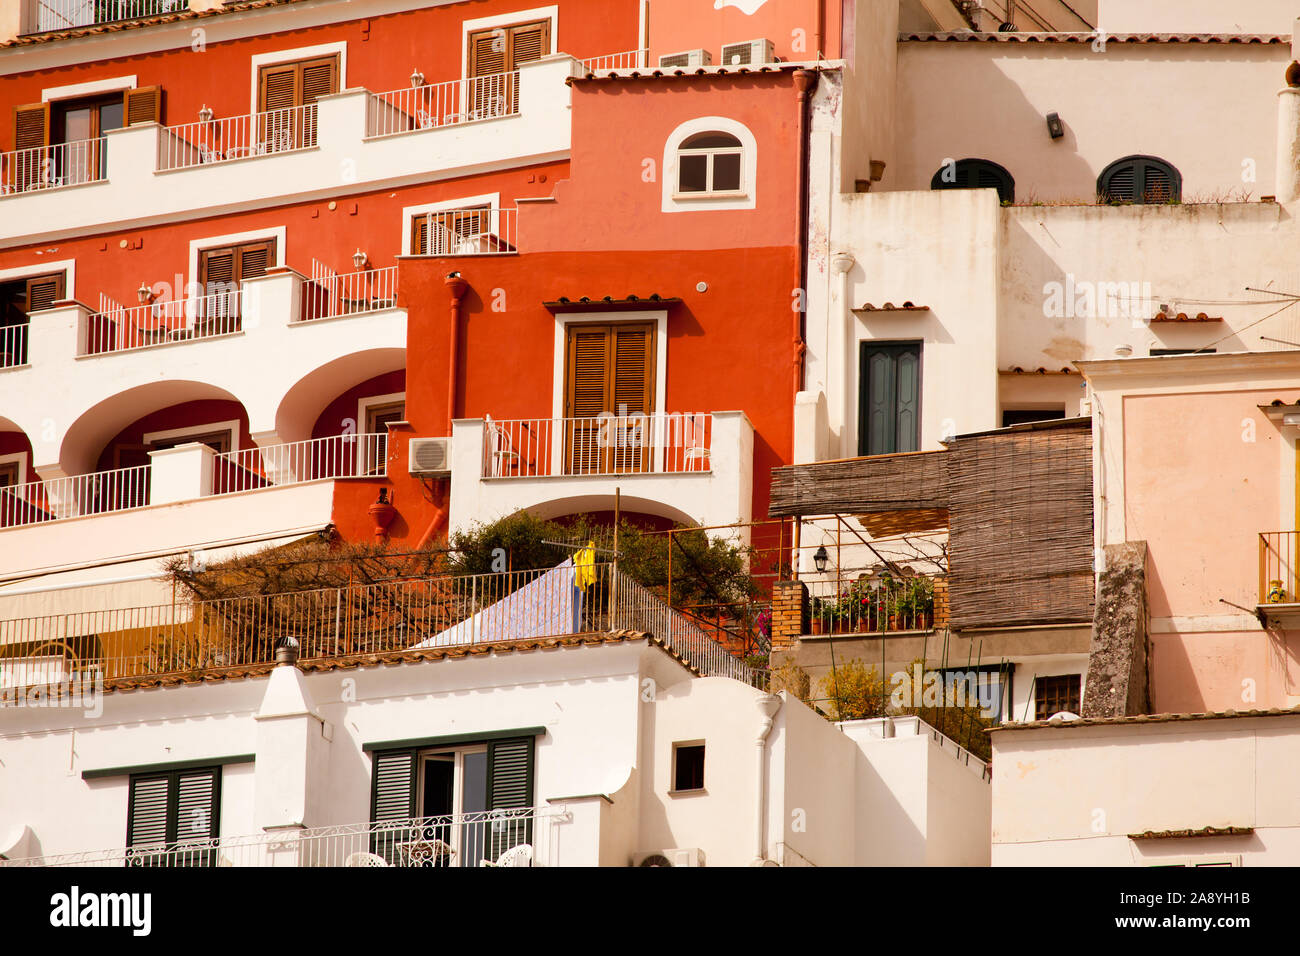 Houses perched on the steep cliffs of Positano, Amalfi coast, Italy. Stock Photo